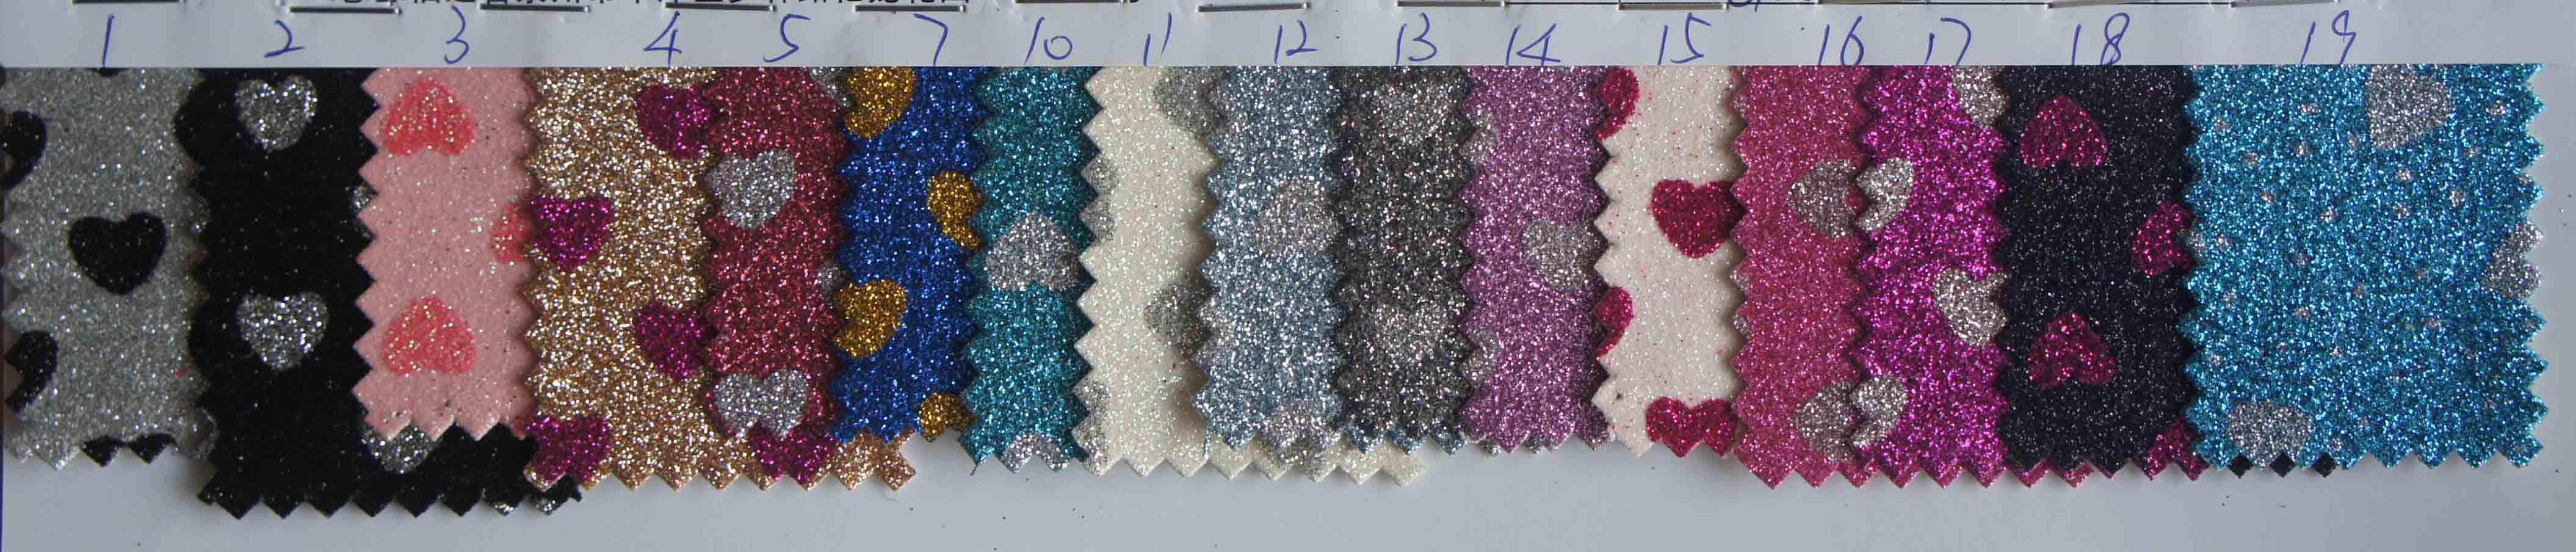 Gl-072 Decorative Shiny Glitter Wallpaper Fabric